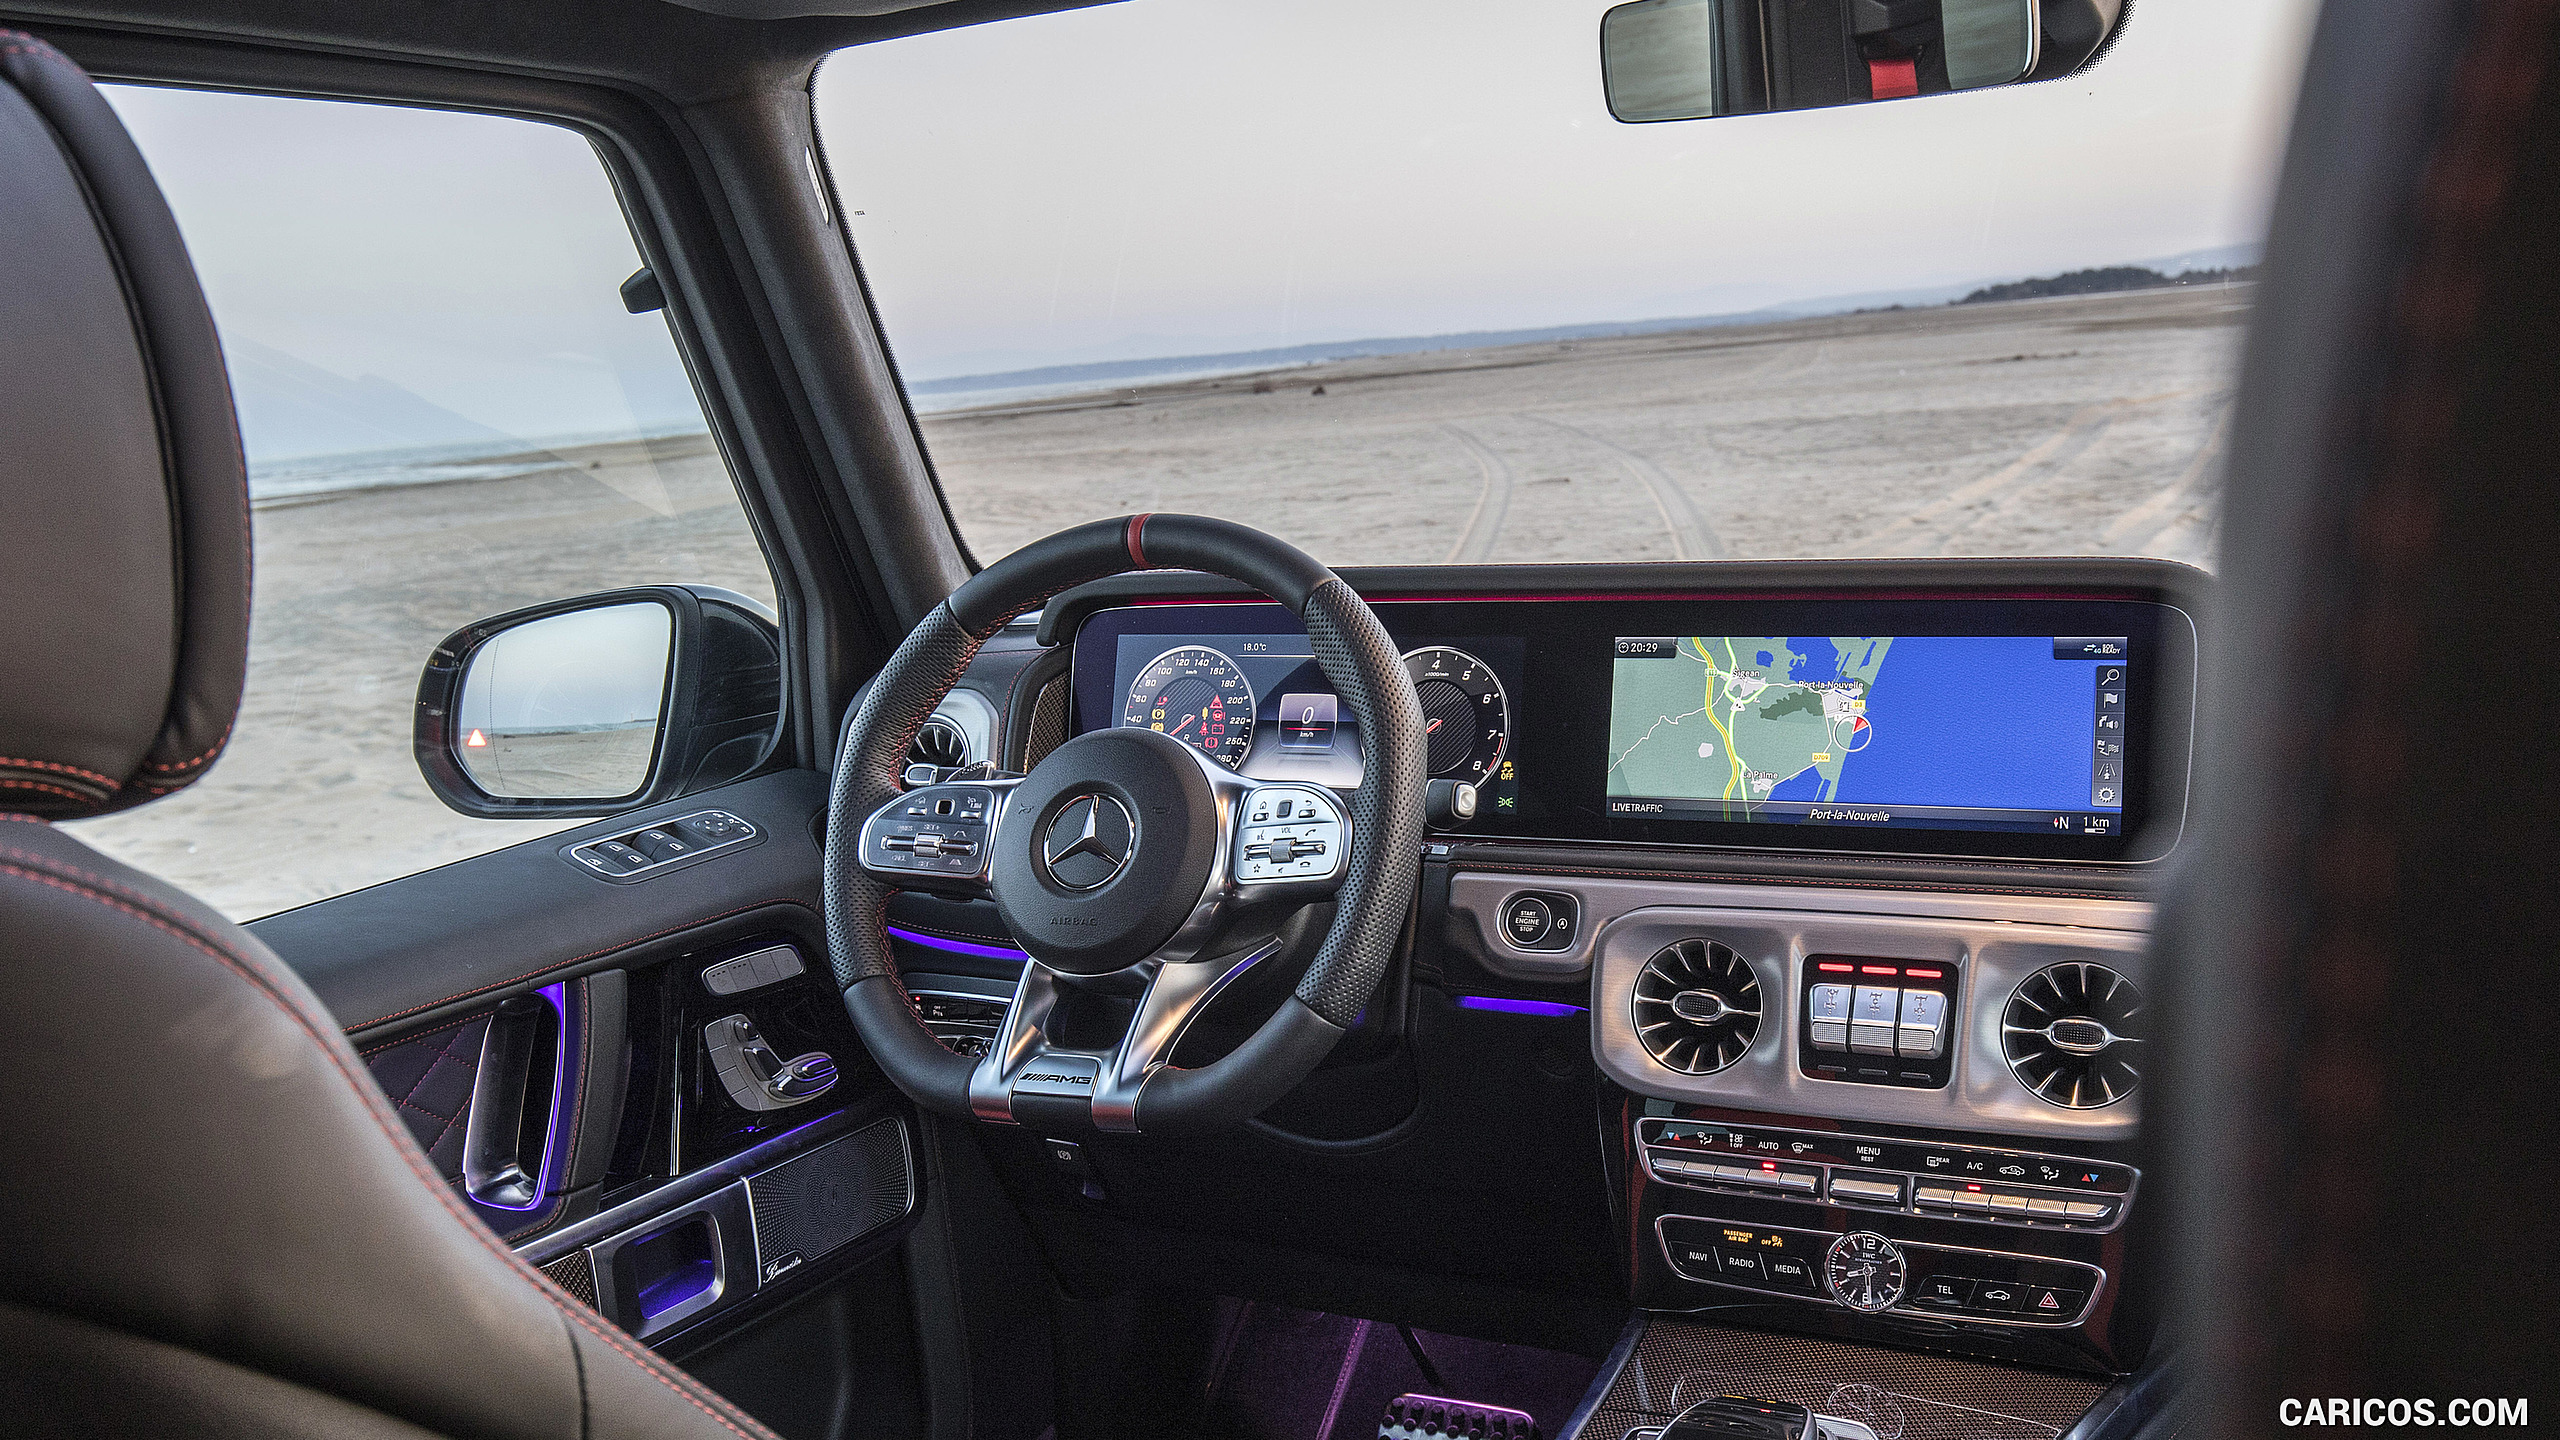 2019 Mercedes-AMG G63 - Interior, #201 of 452